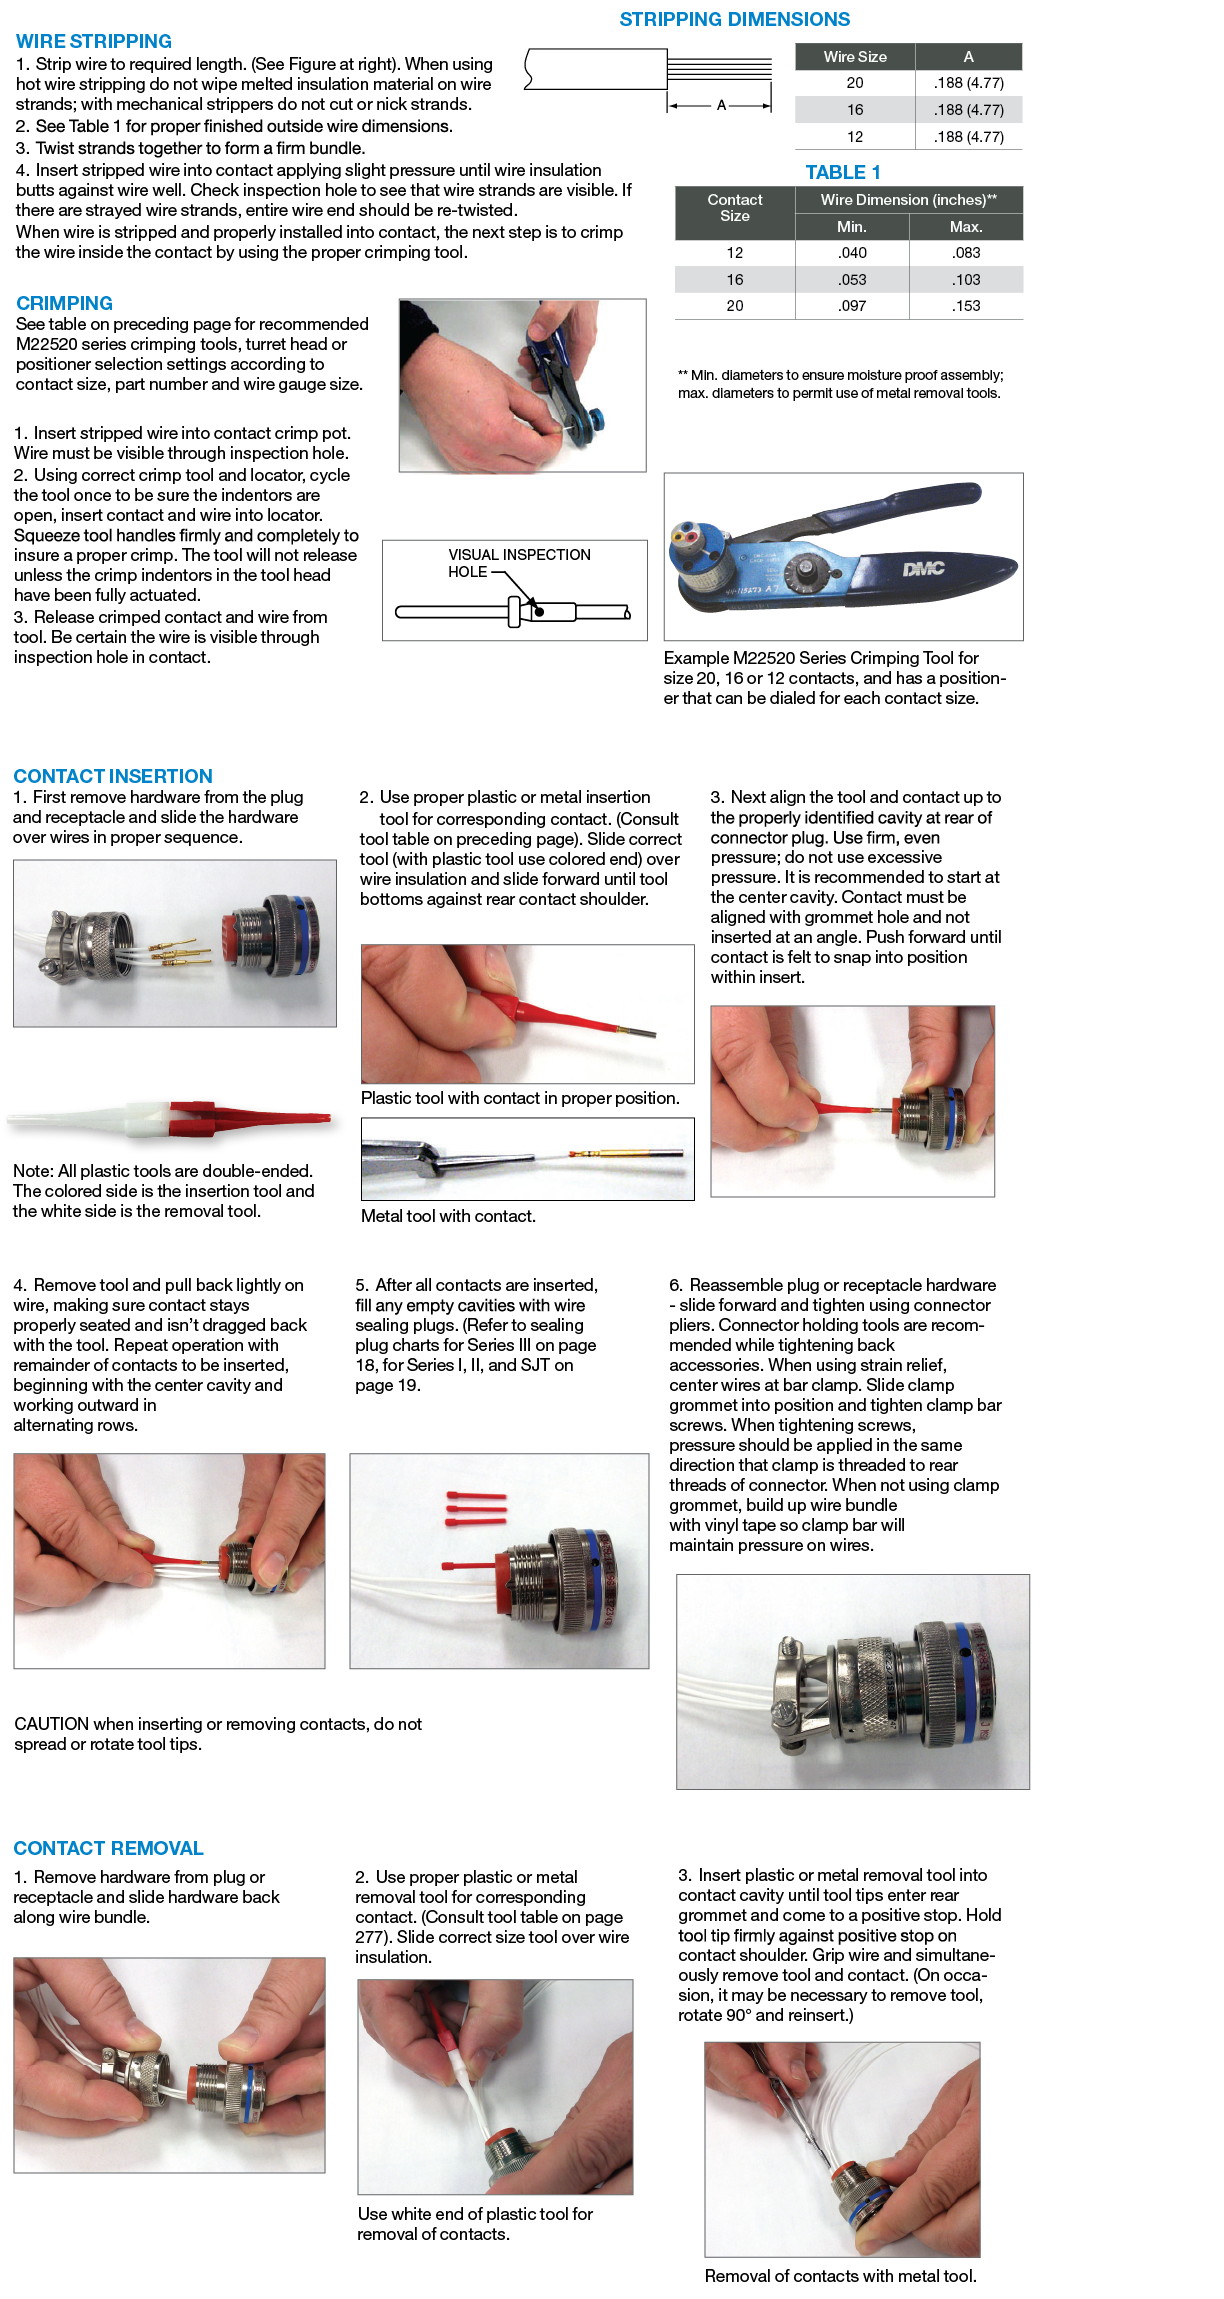 MIL-DTL-26482 Series II Connectors | Products | Amphenol Aerospace